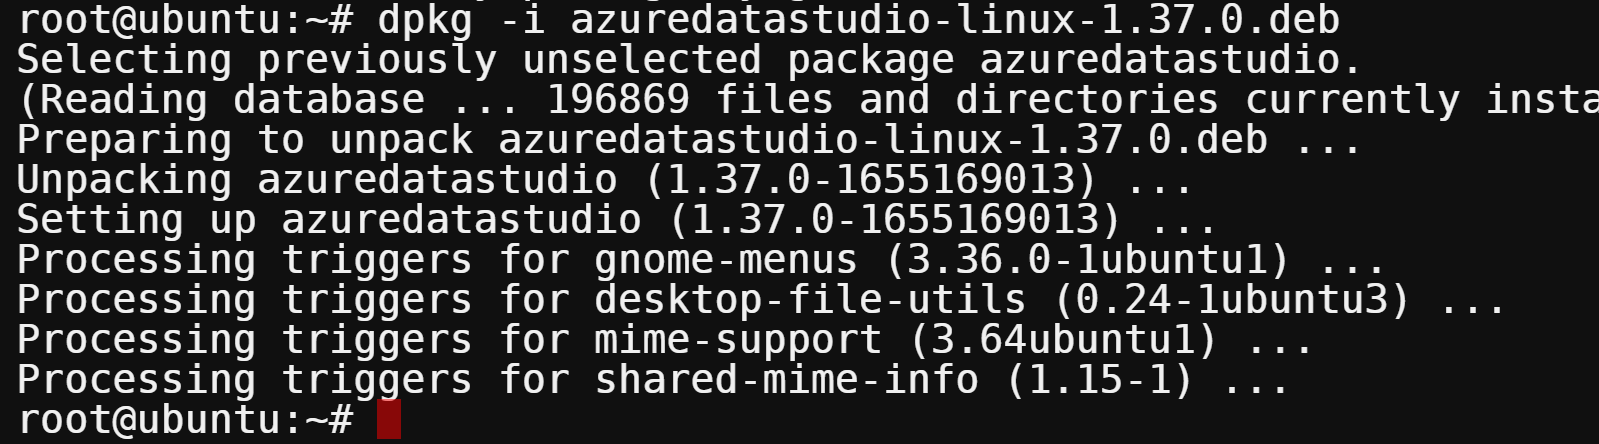 Installing Azure Data Studio on Linux